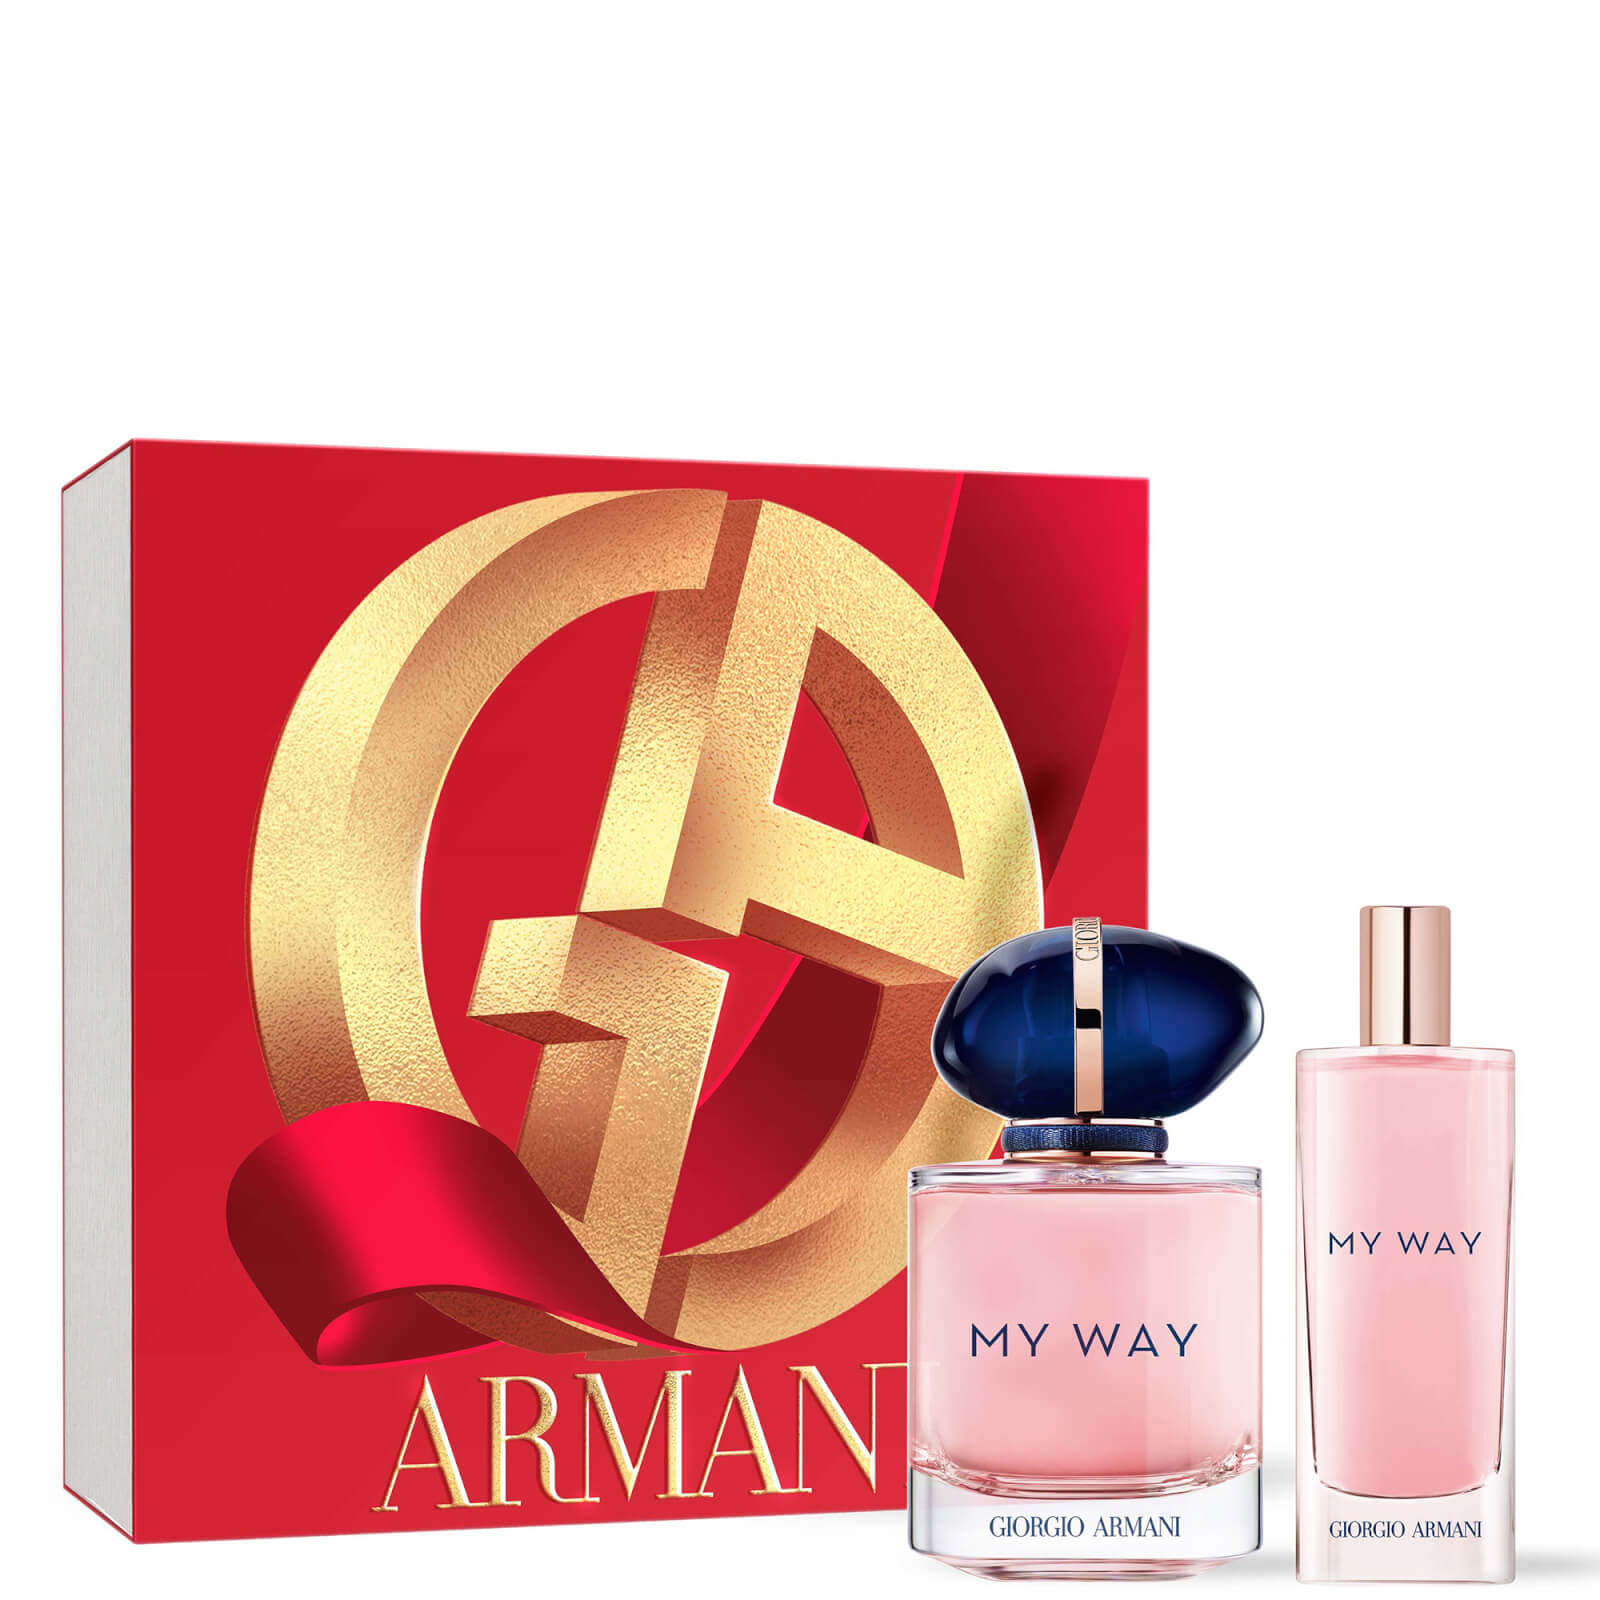 Armani My Way Eau de Parfum 50ml and My Way